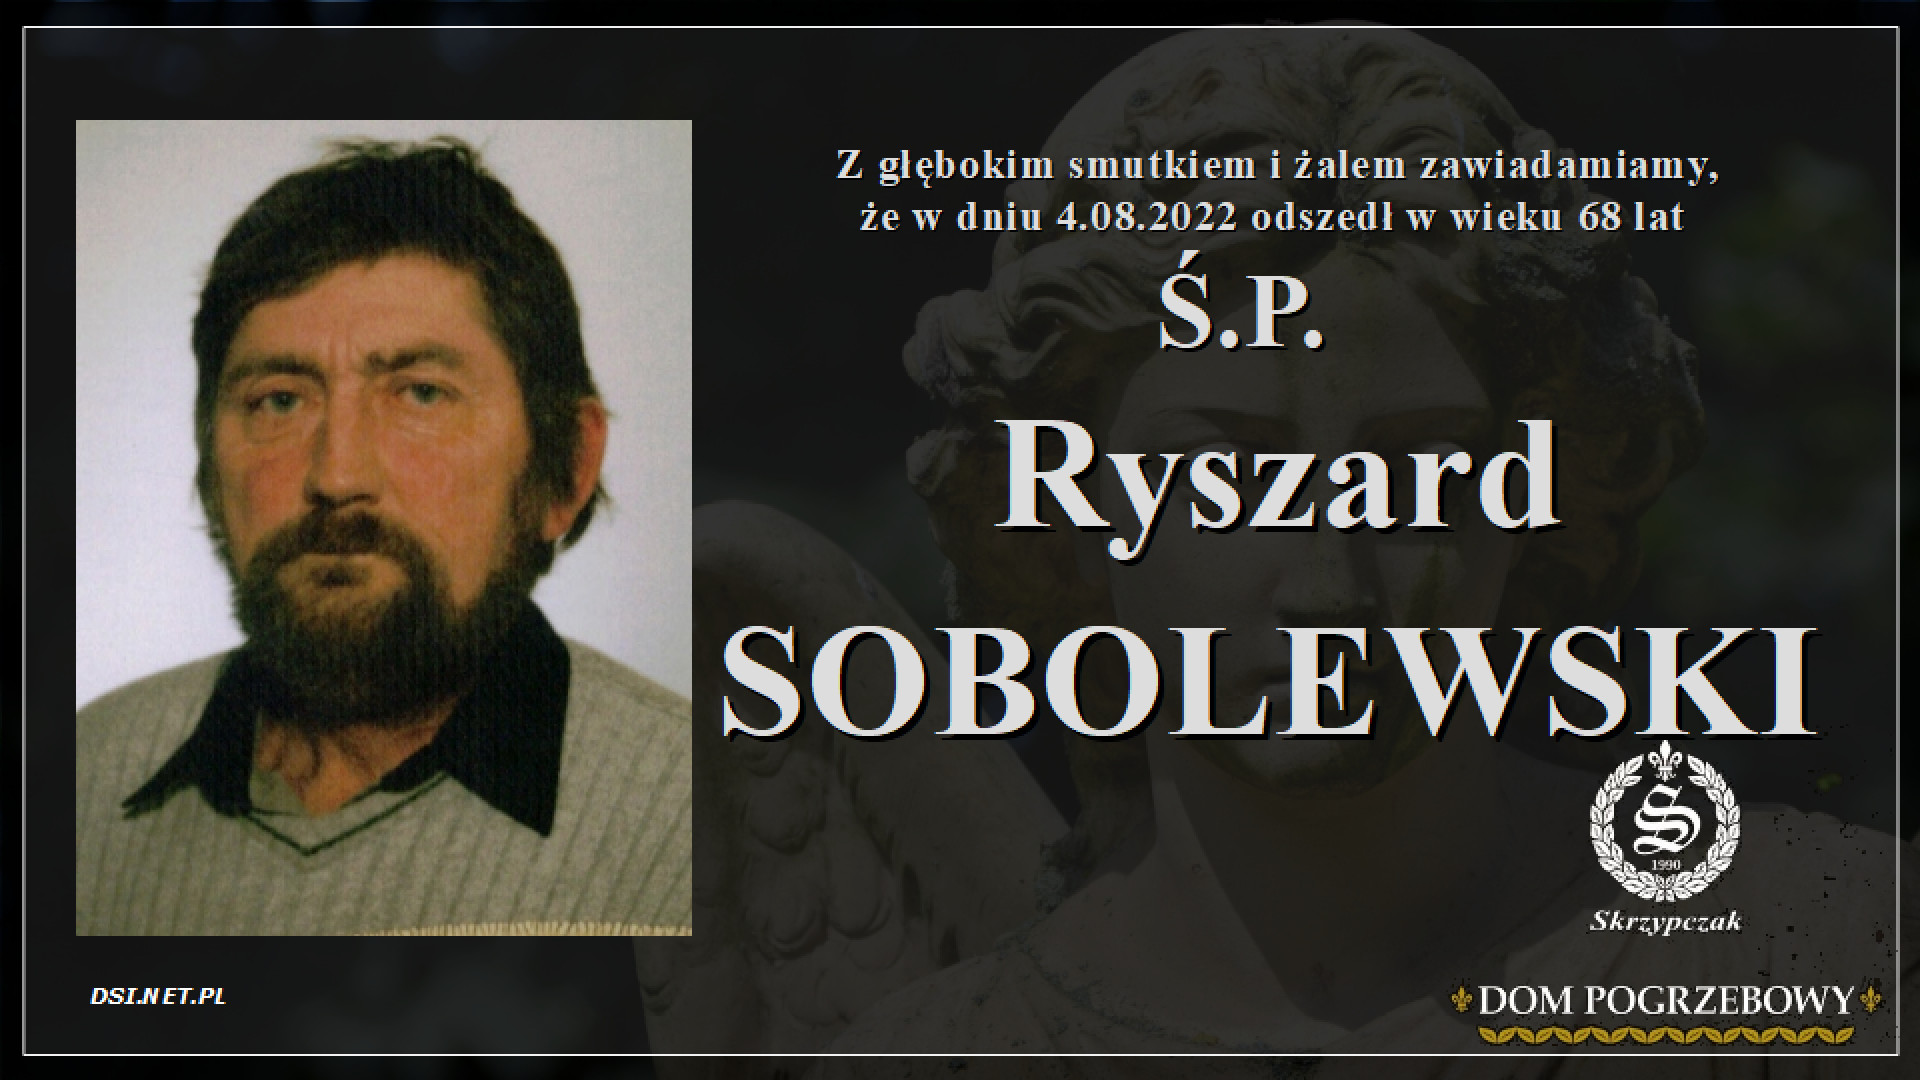 Ś.P. Ryszard Sobolewski